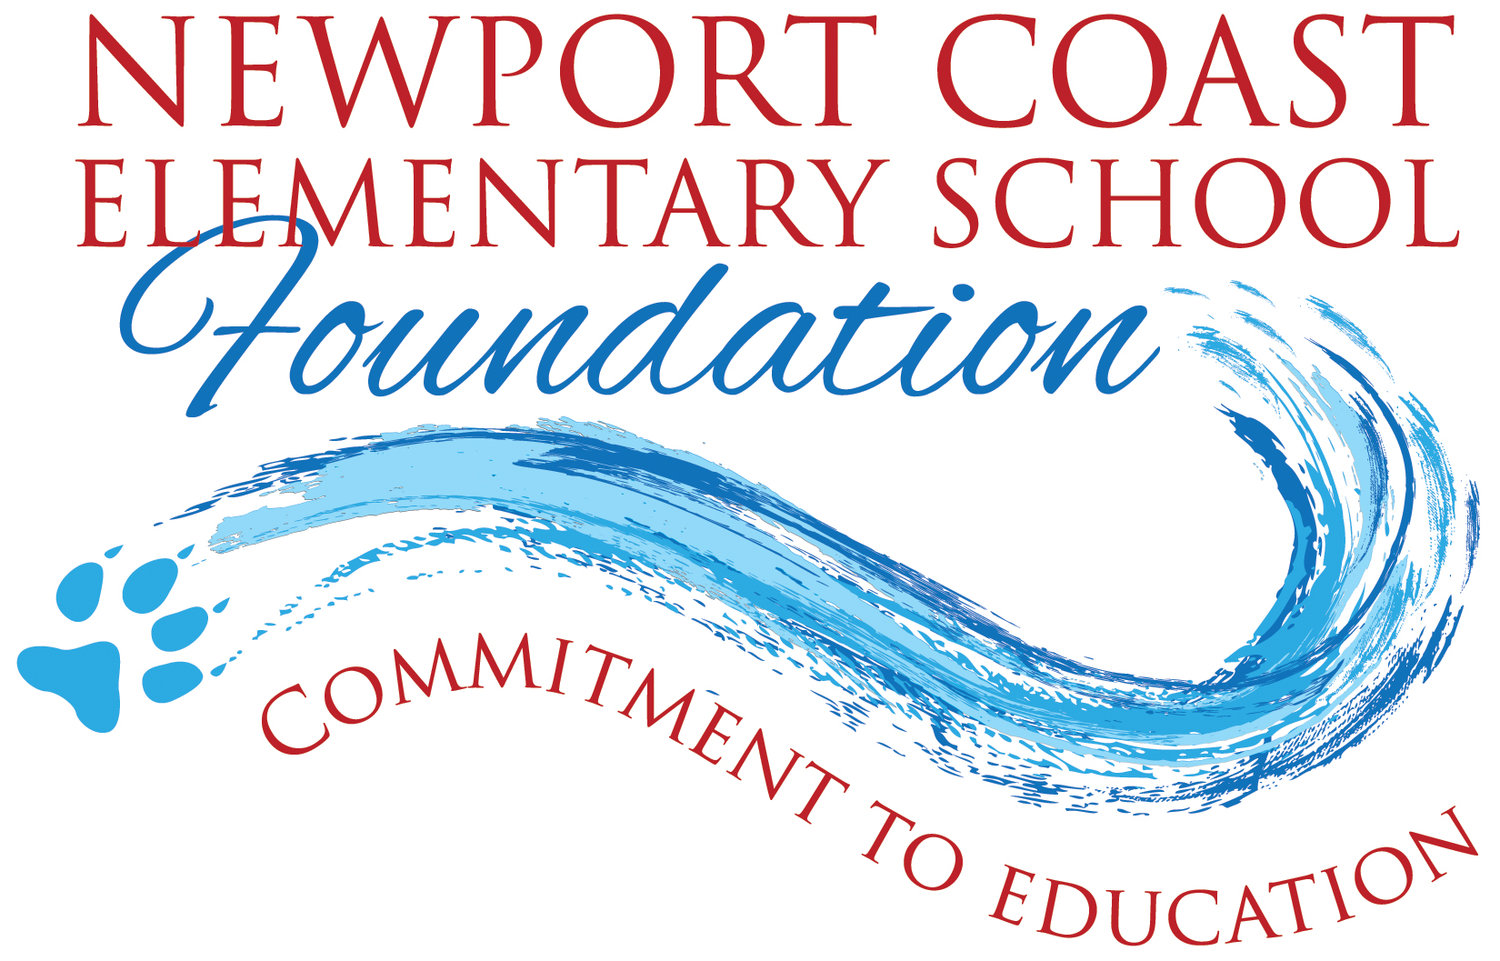 Newport Coast Elementary School Foundation